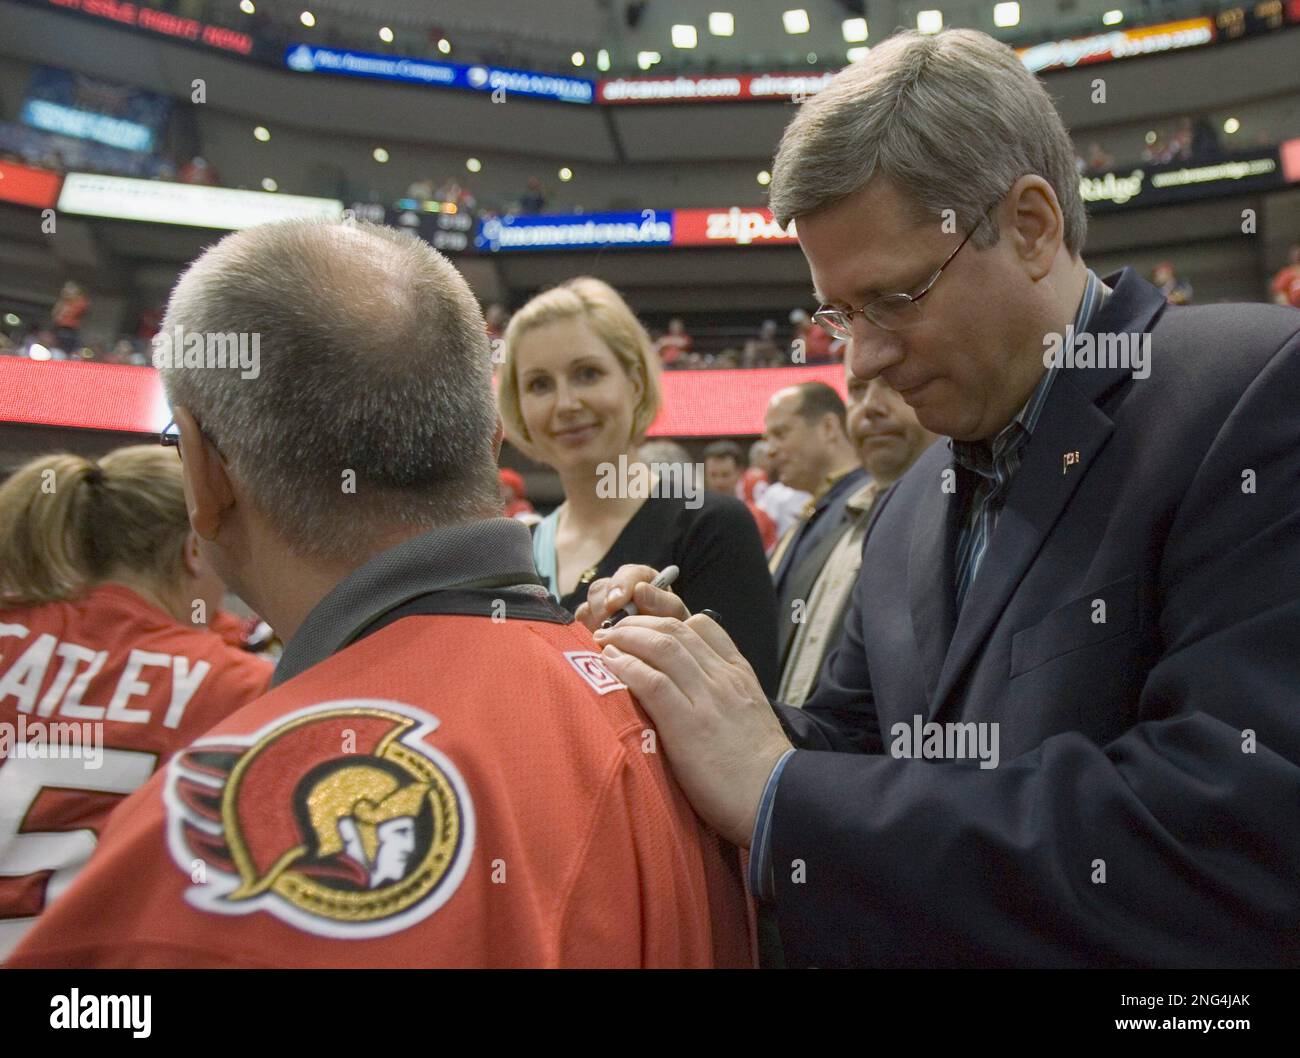 Canadian Prime Minister Stephen Harper autographs a fan's jersey